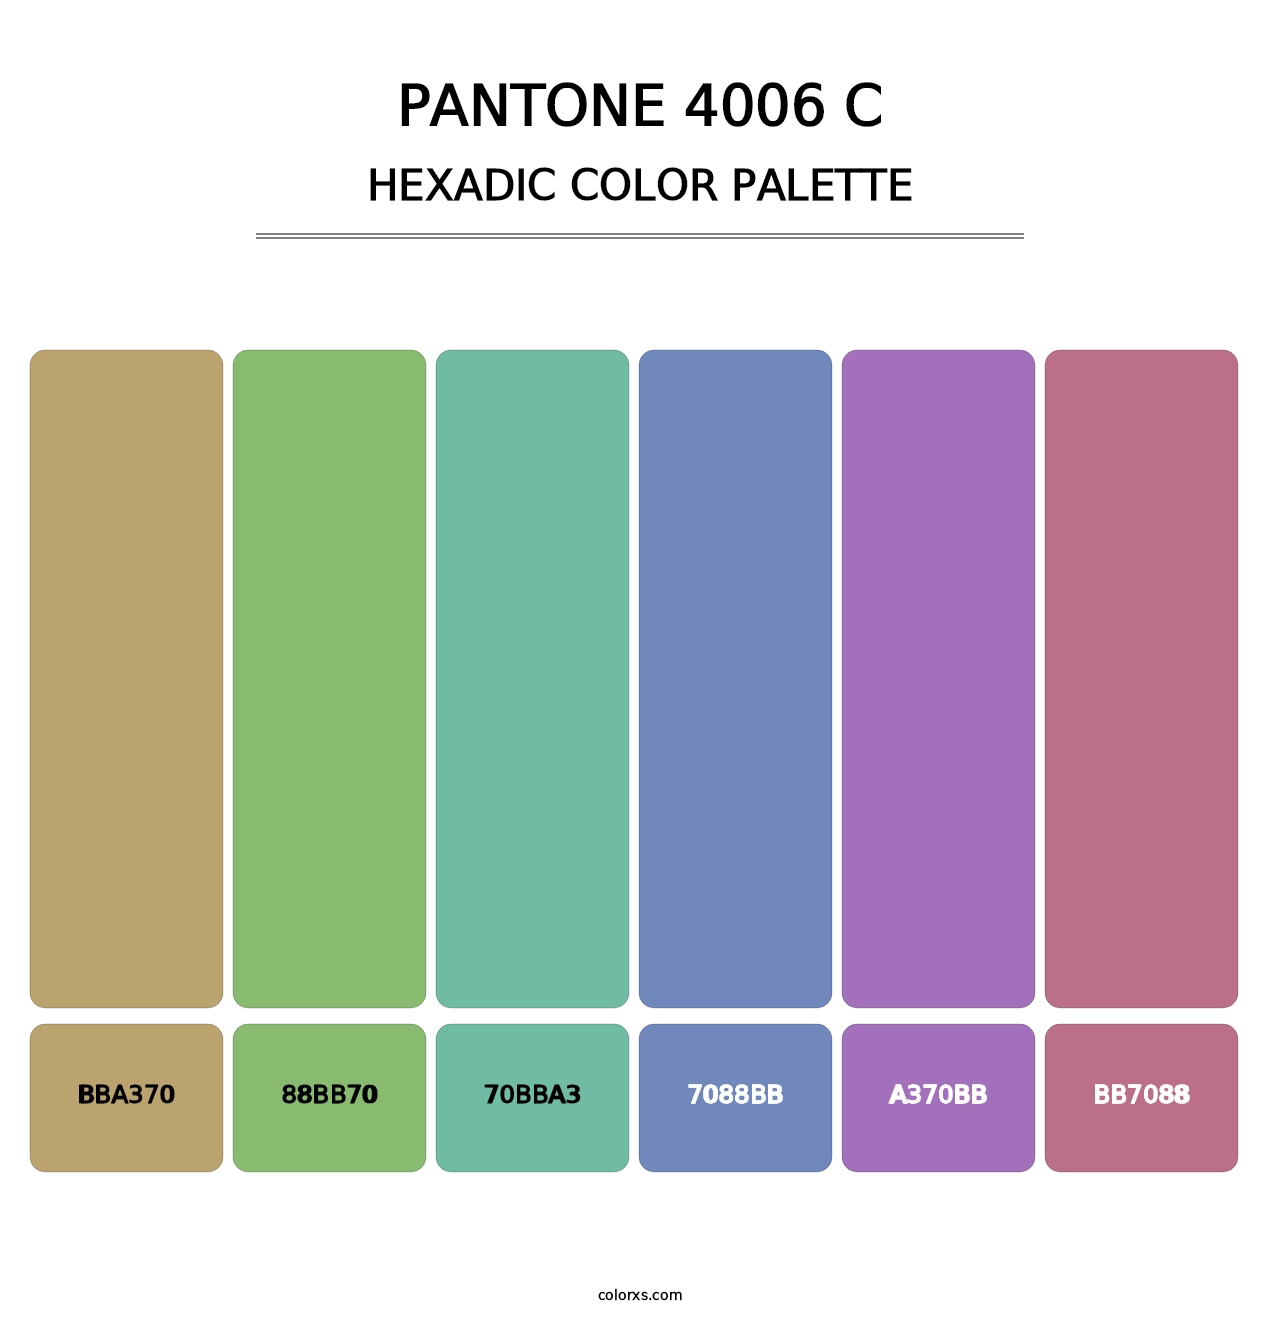 PANTONE 4006 C - Hexadic Color Palette